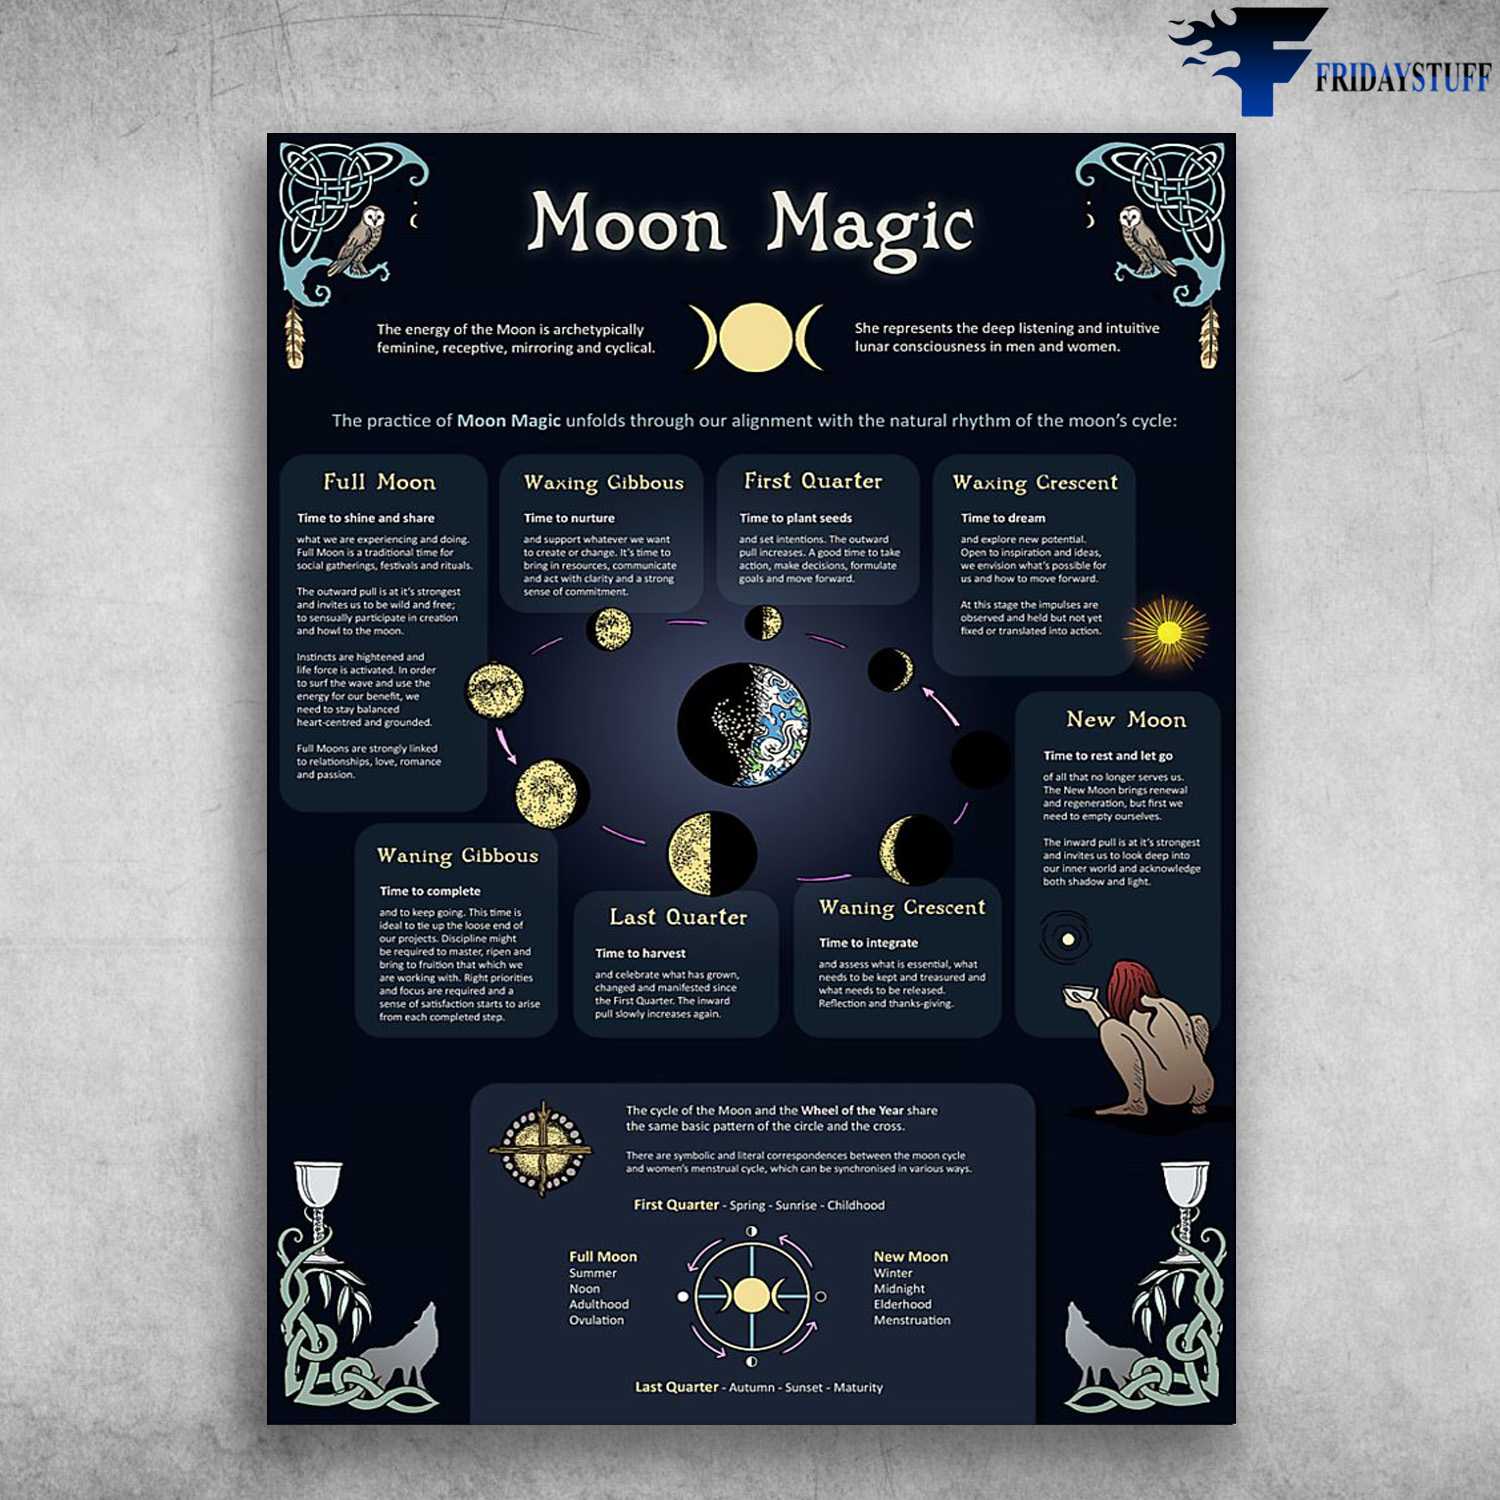 Moon Magic, Moon Cycle - Full Moon, Waxing Gibbous, First Quarter, Waxing Crescent, Waning Gibbous, Last Quarter, Waning Crescent, New Moon